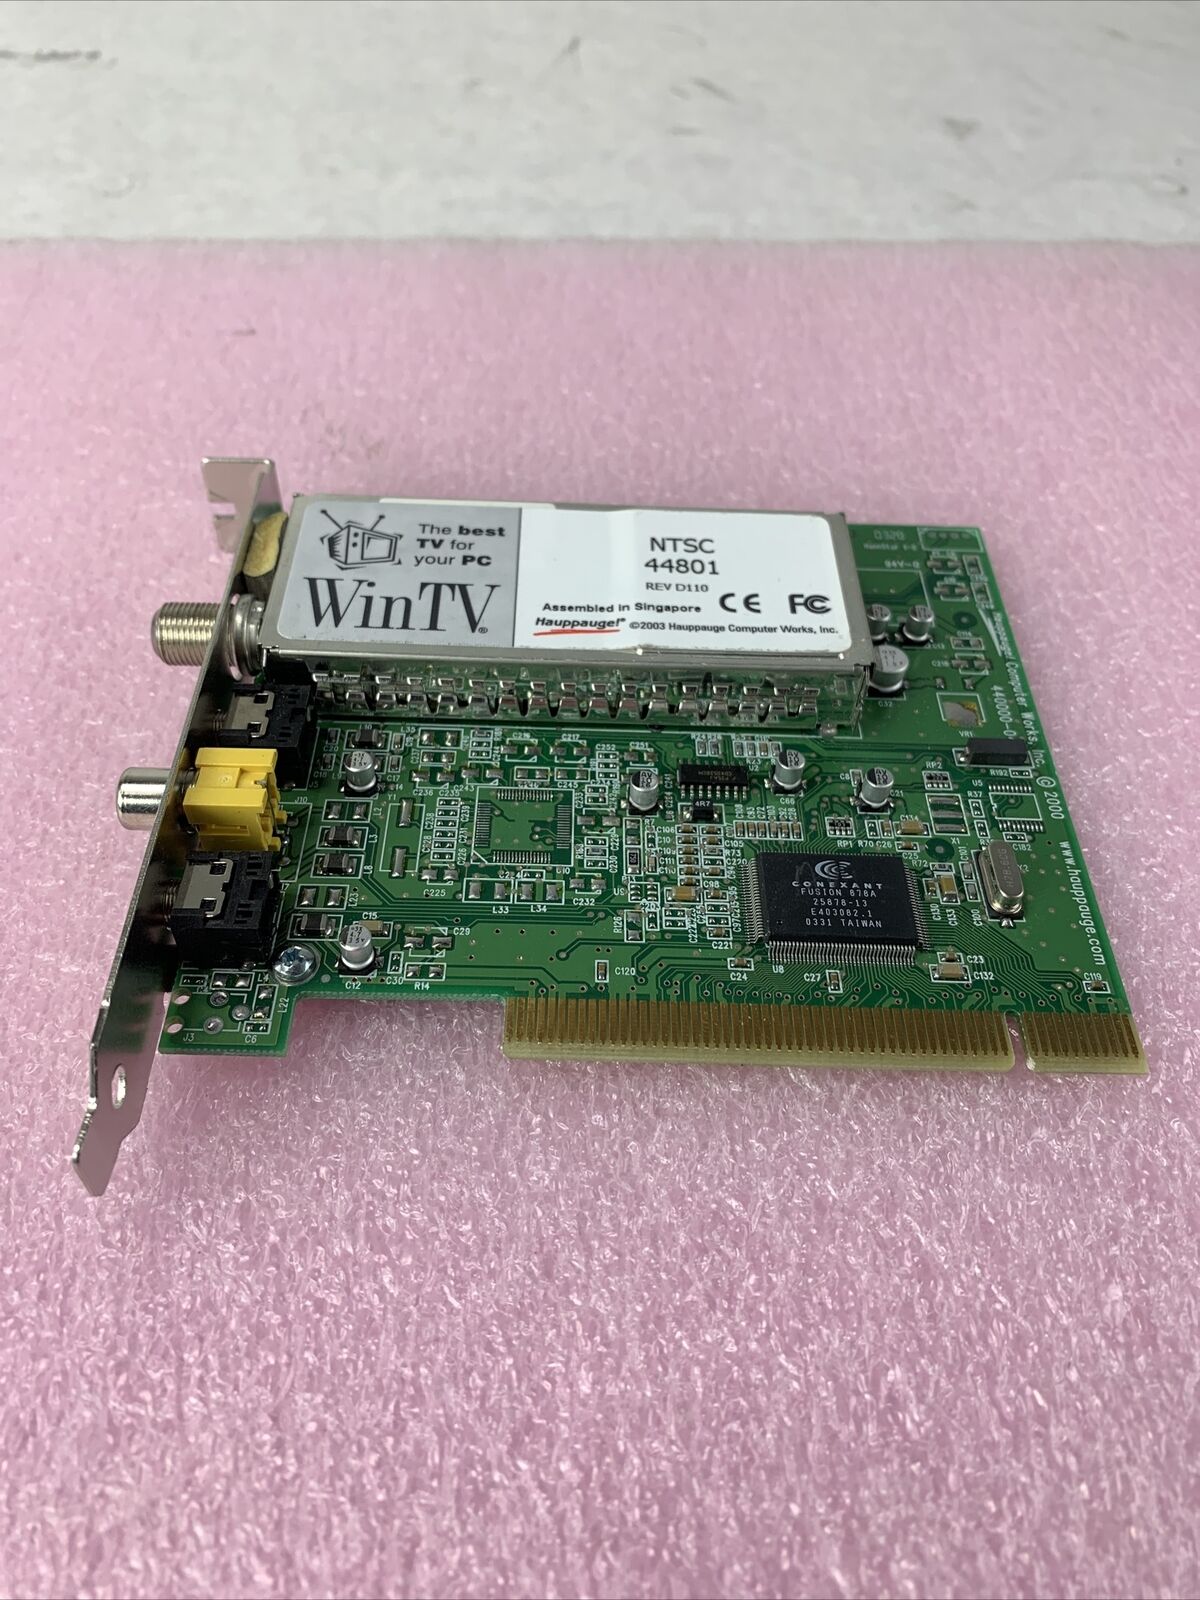 Hauppage! WinTV Desktop PCI Card Tuner NTSC 44801 Rev D110